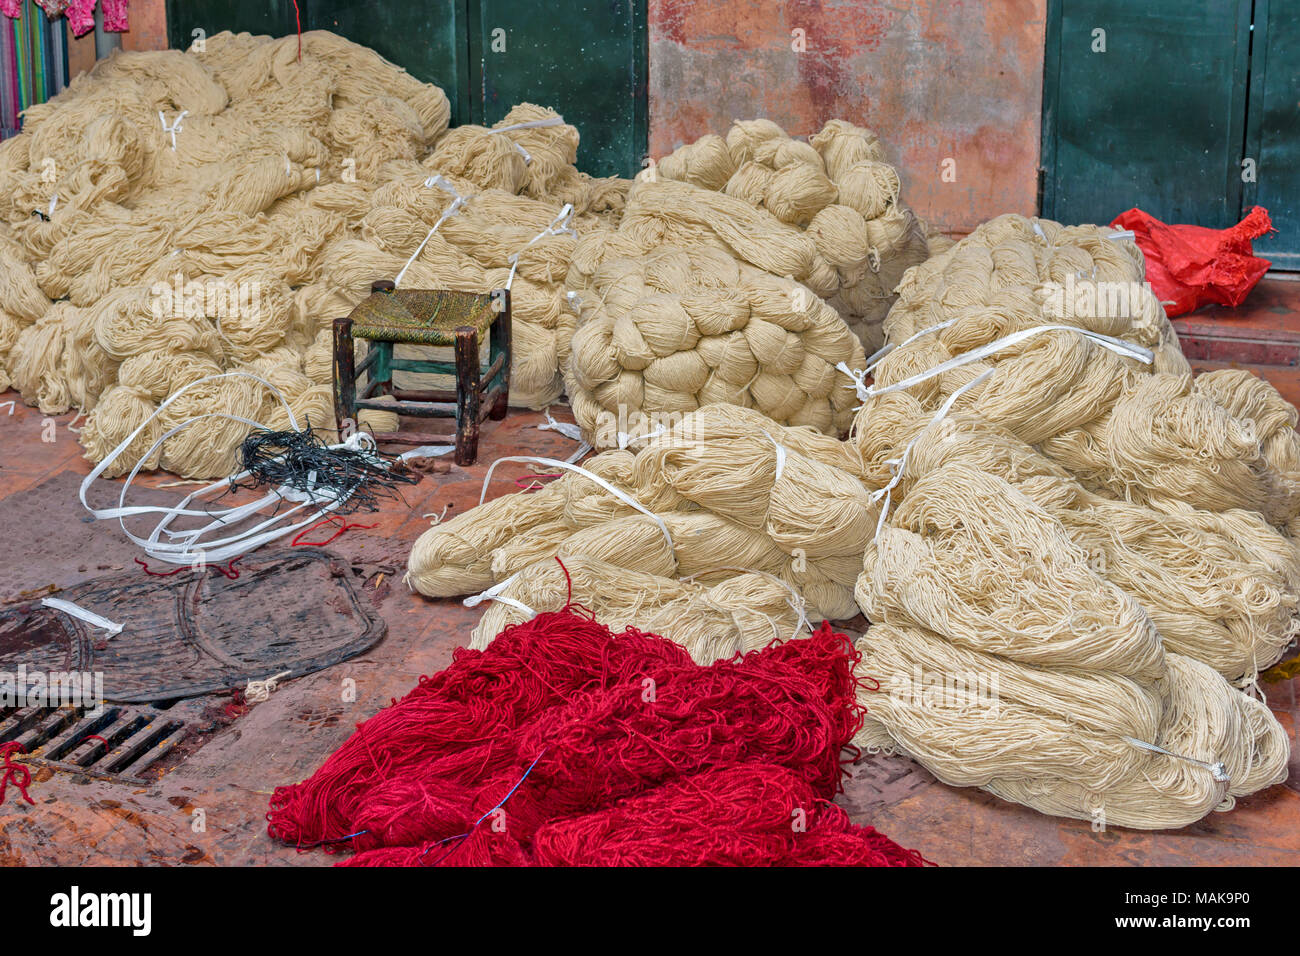 Il Marocco Marrakech Jemaa el Fna MEDINA SOUK matasse di materie lana bianca ordinati pronto per la tintura Foto Stock